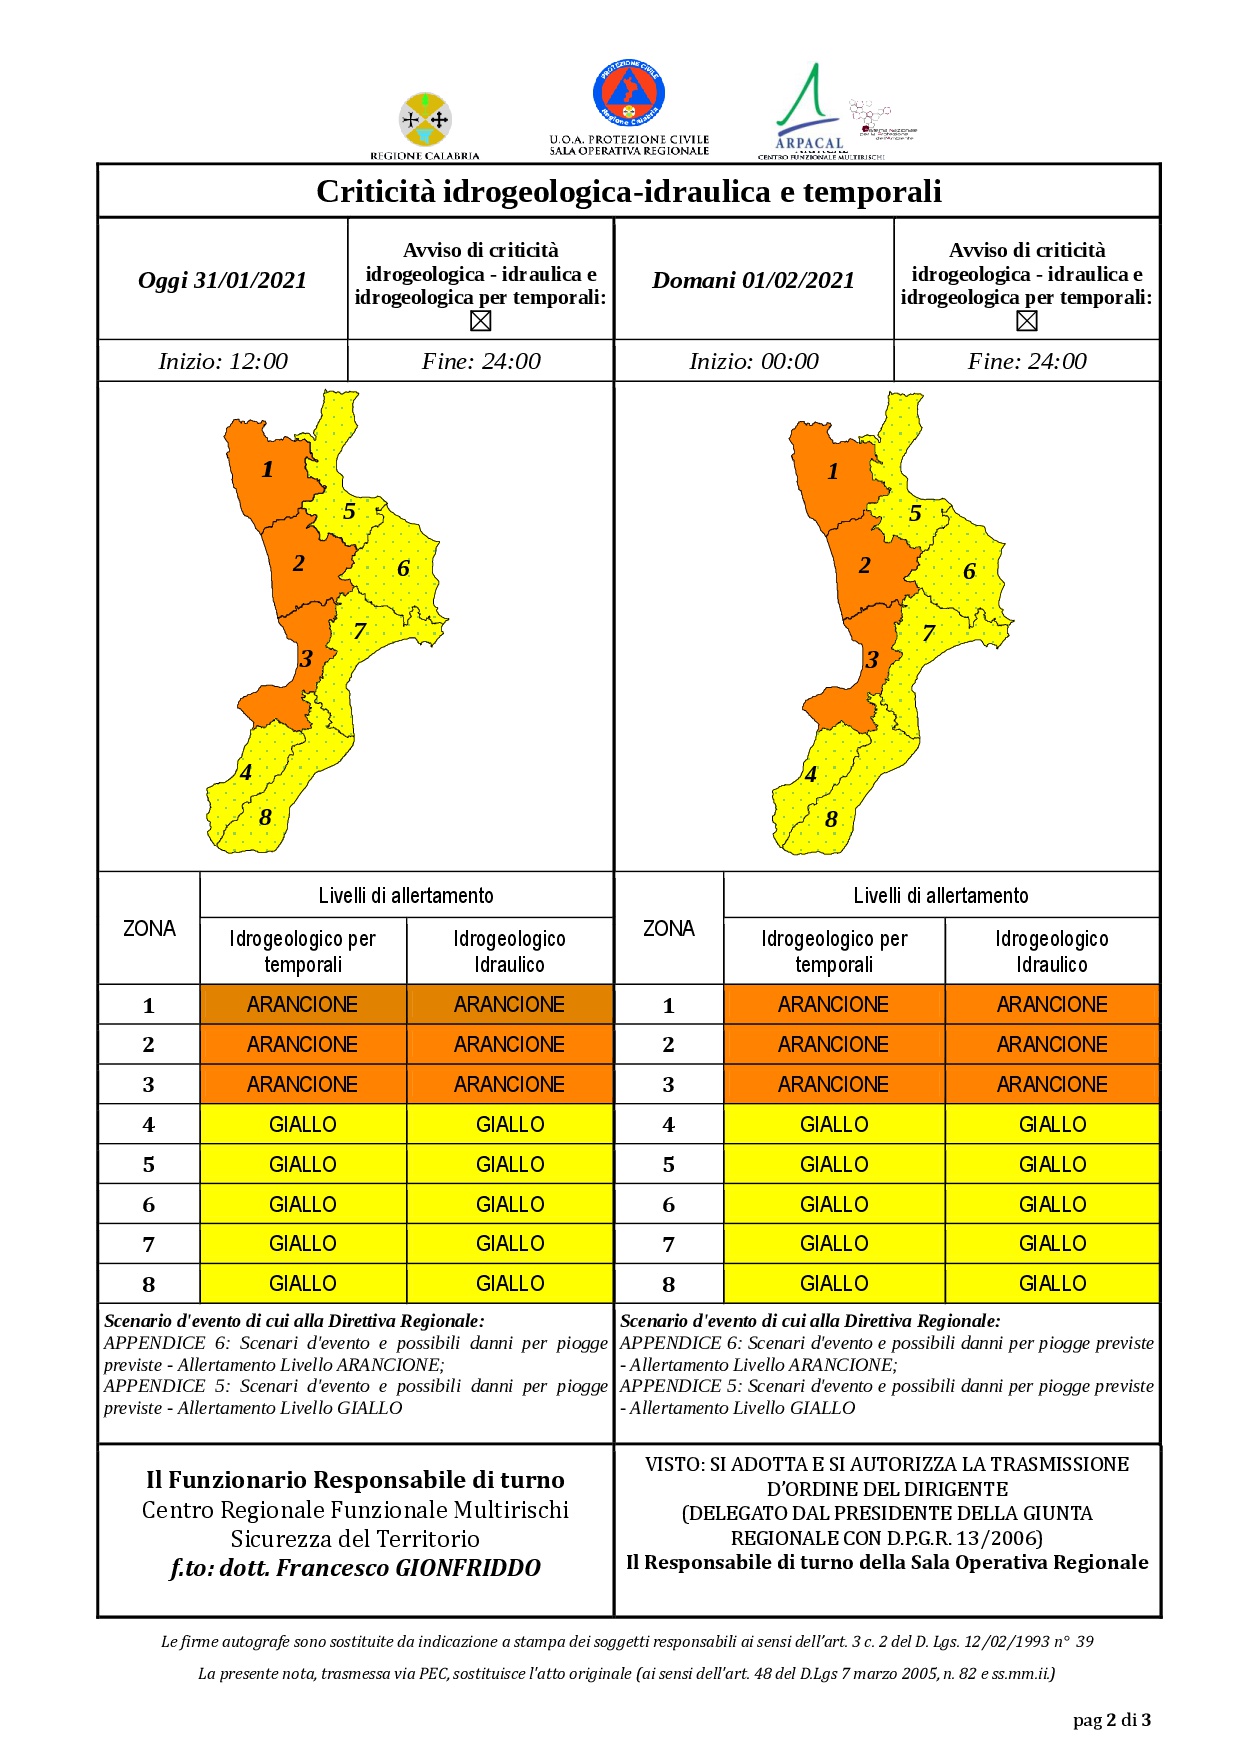 Criticità idrogeologica-idraulica e temporali in Calabria 31-01-2021